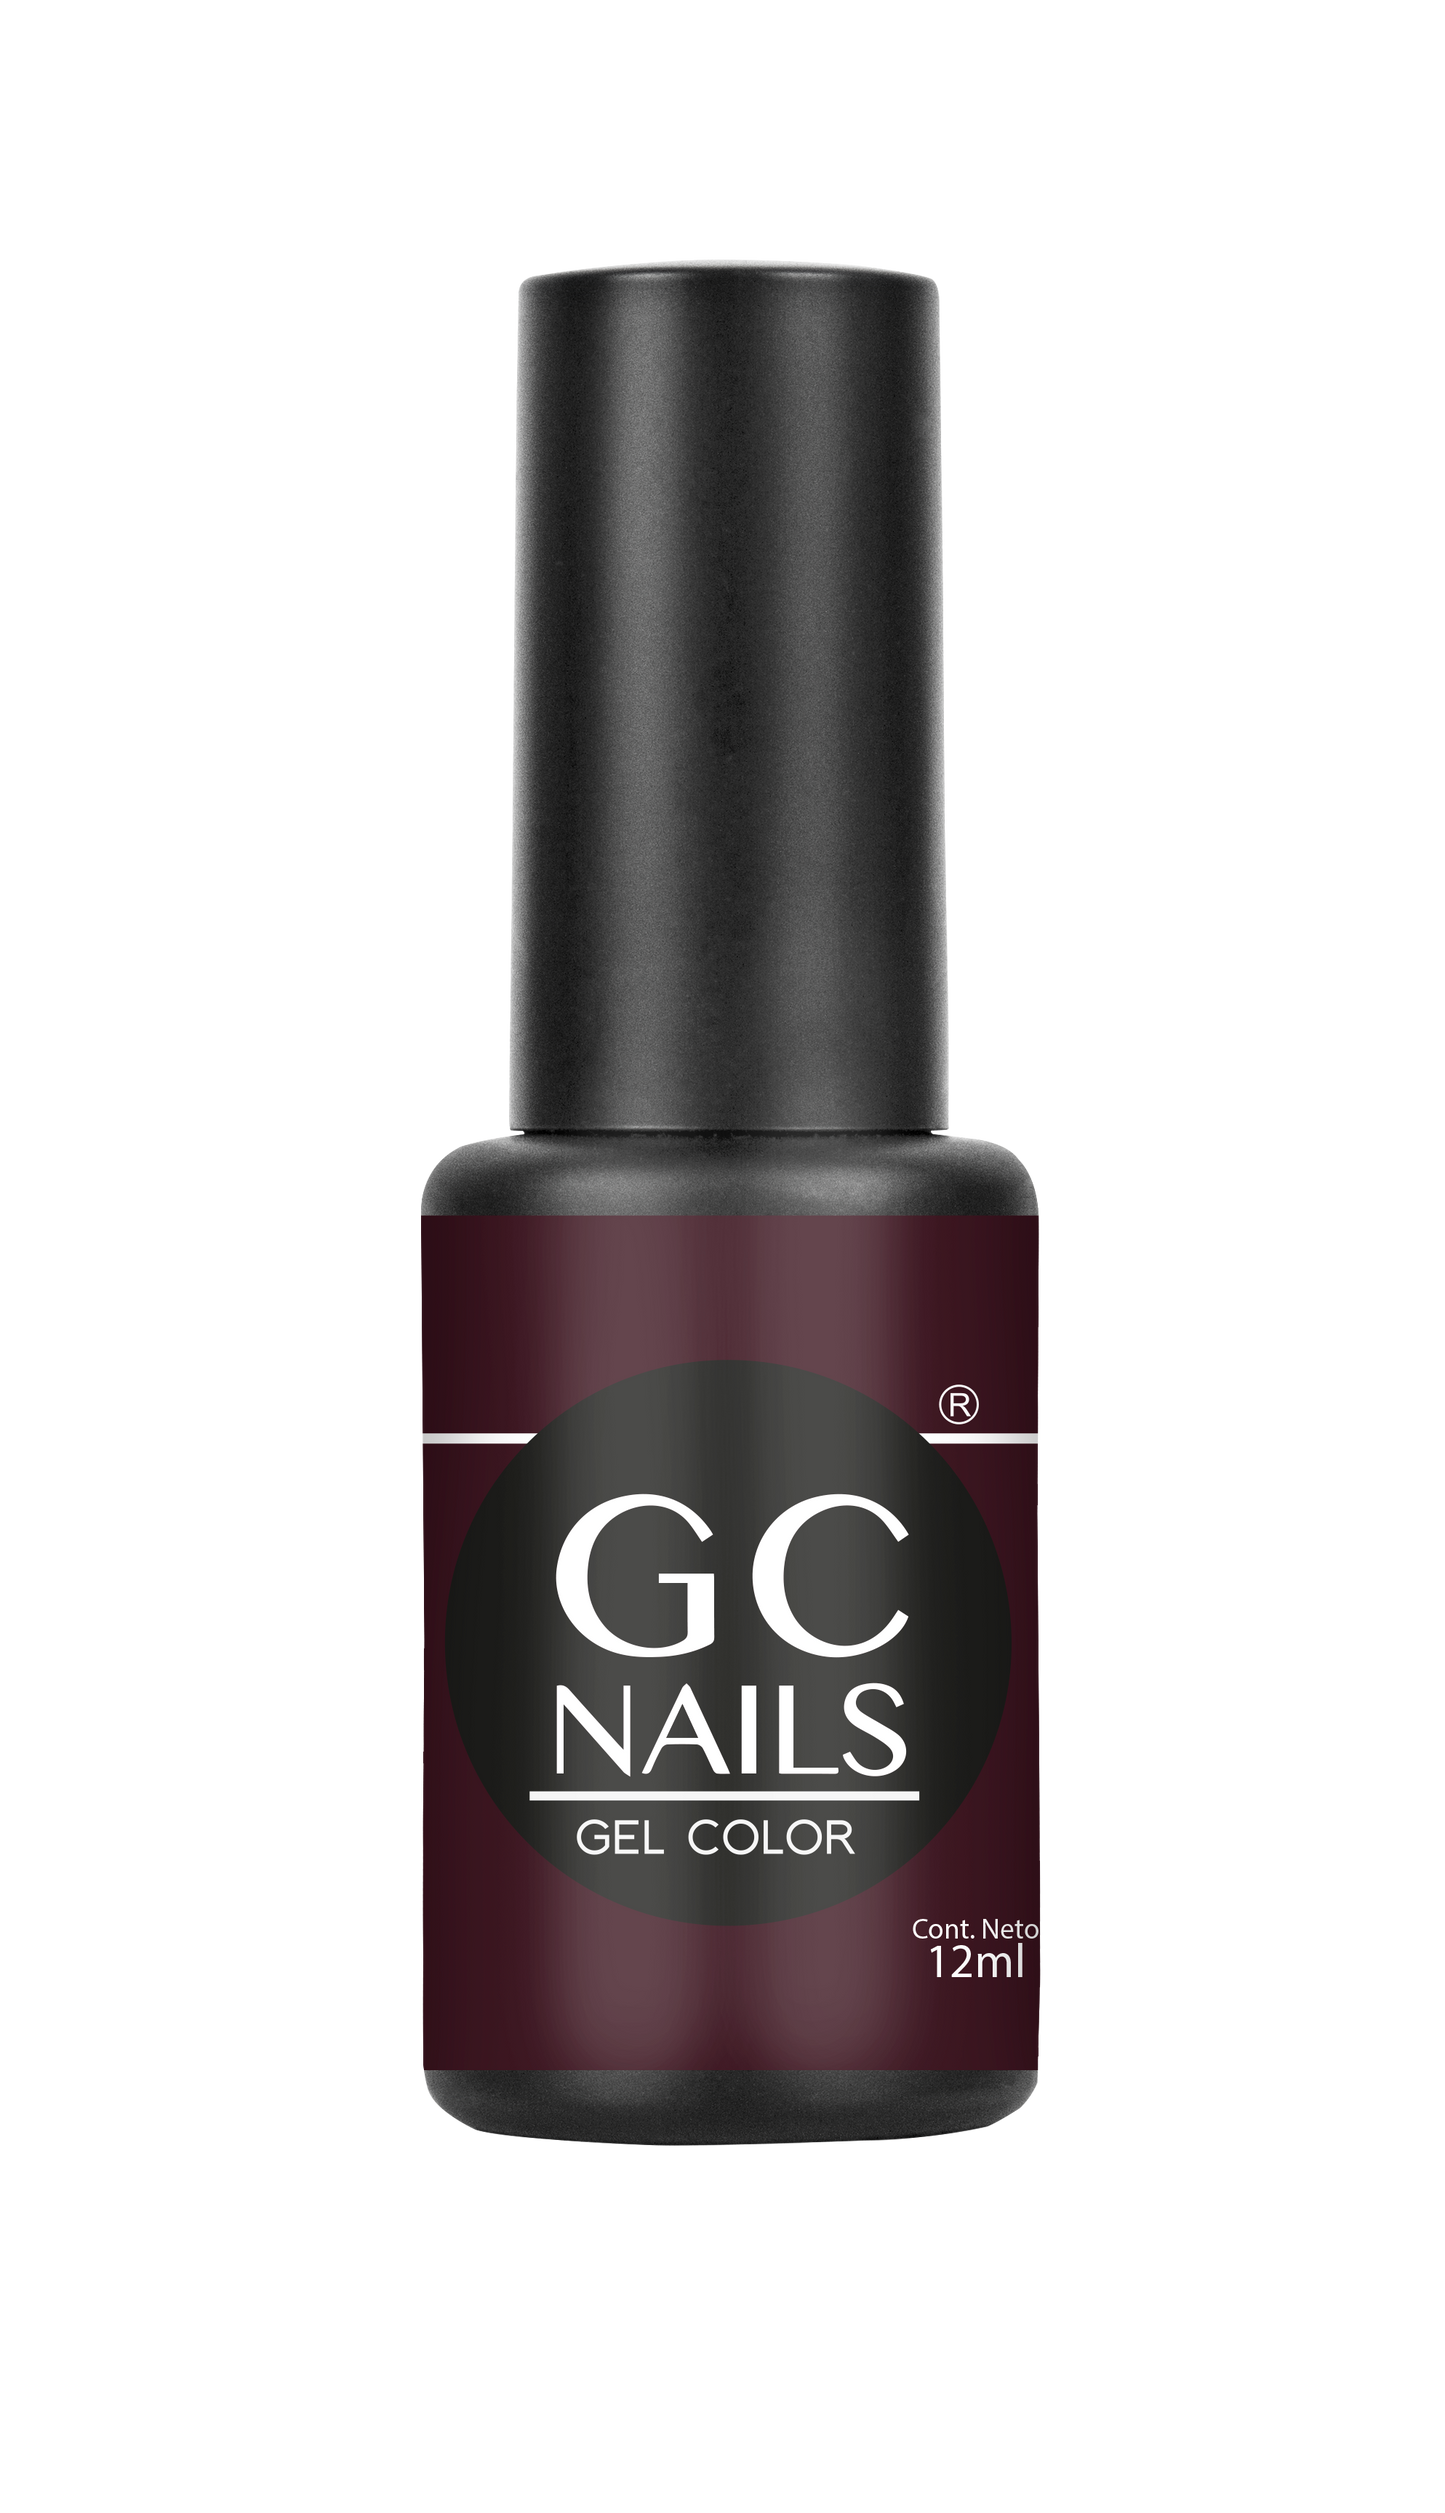 GC nails bel-color 12ml GRANATE 22